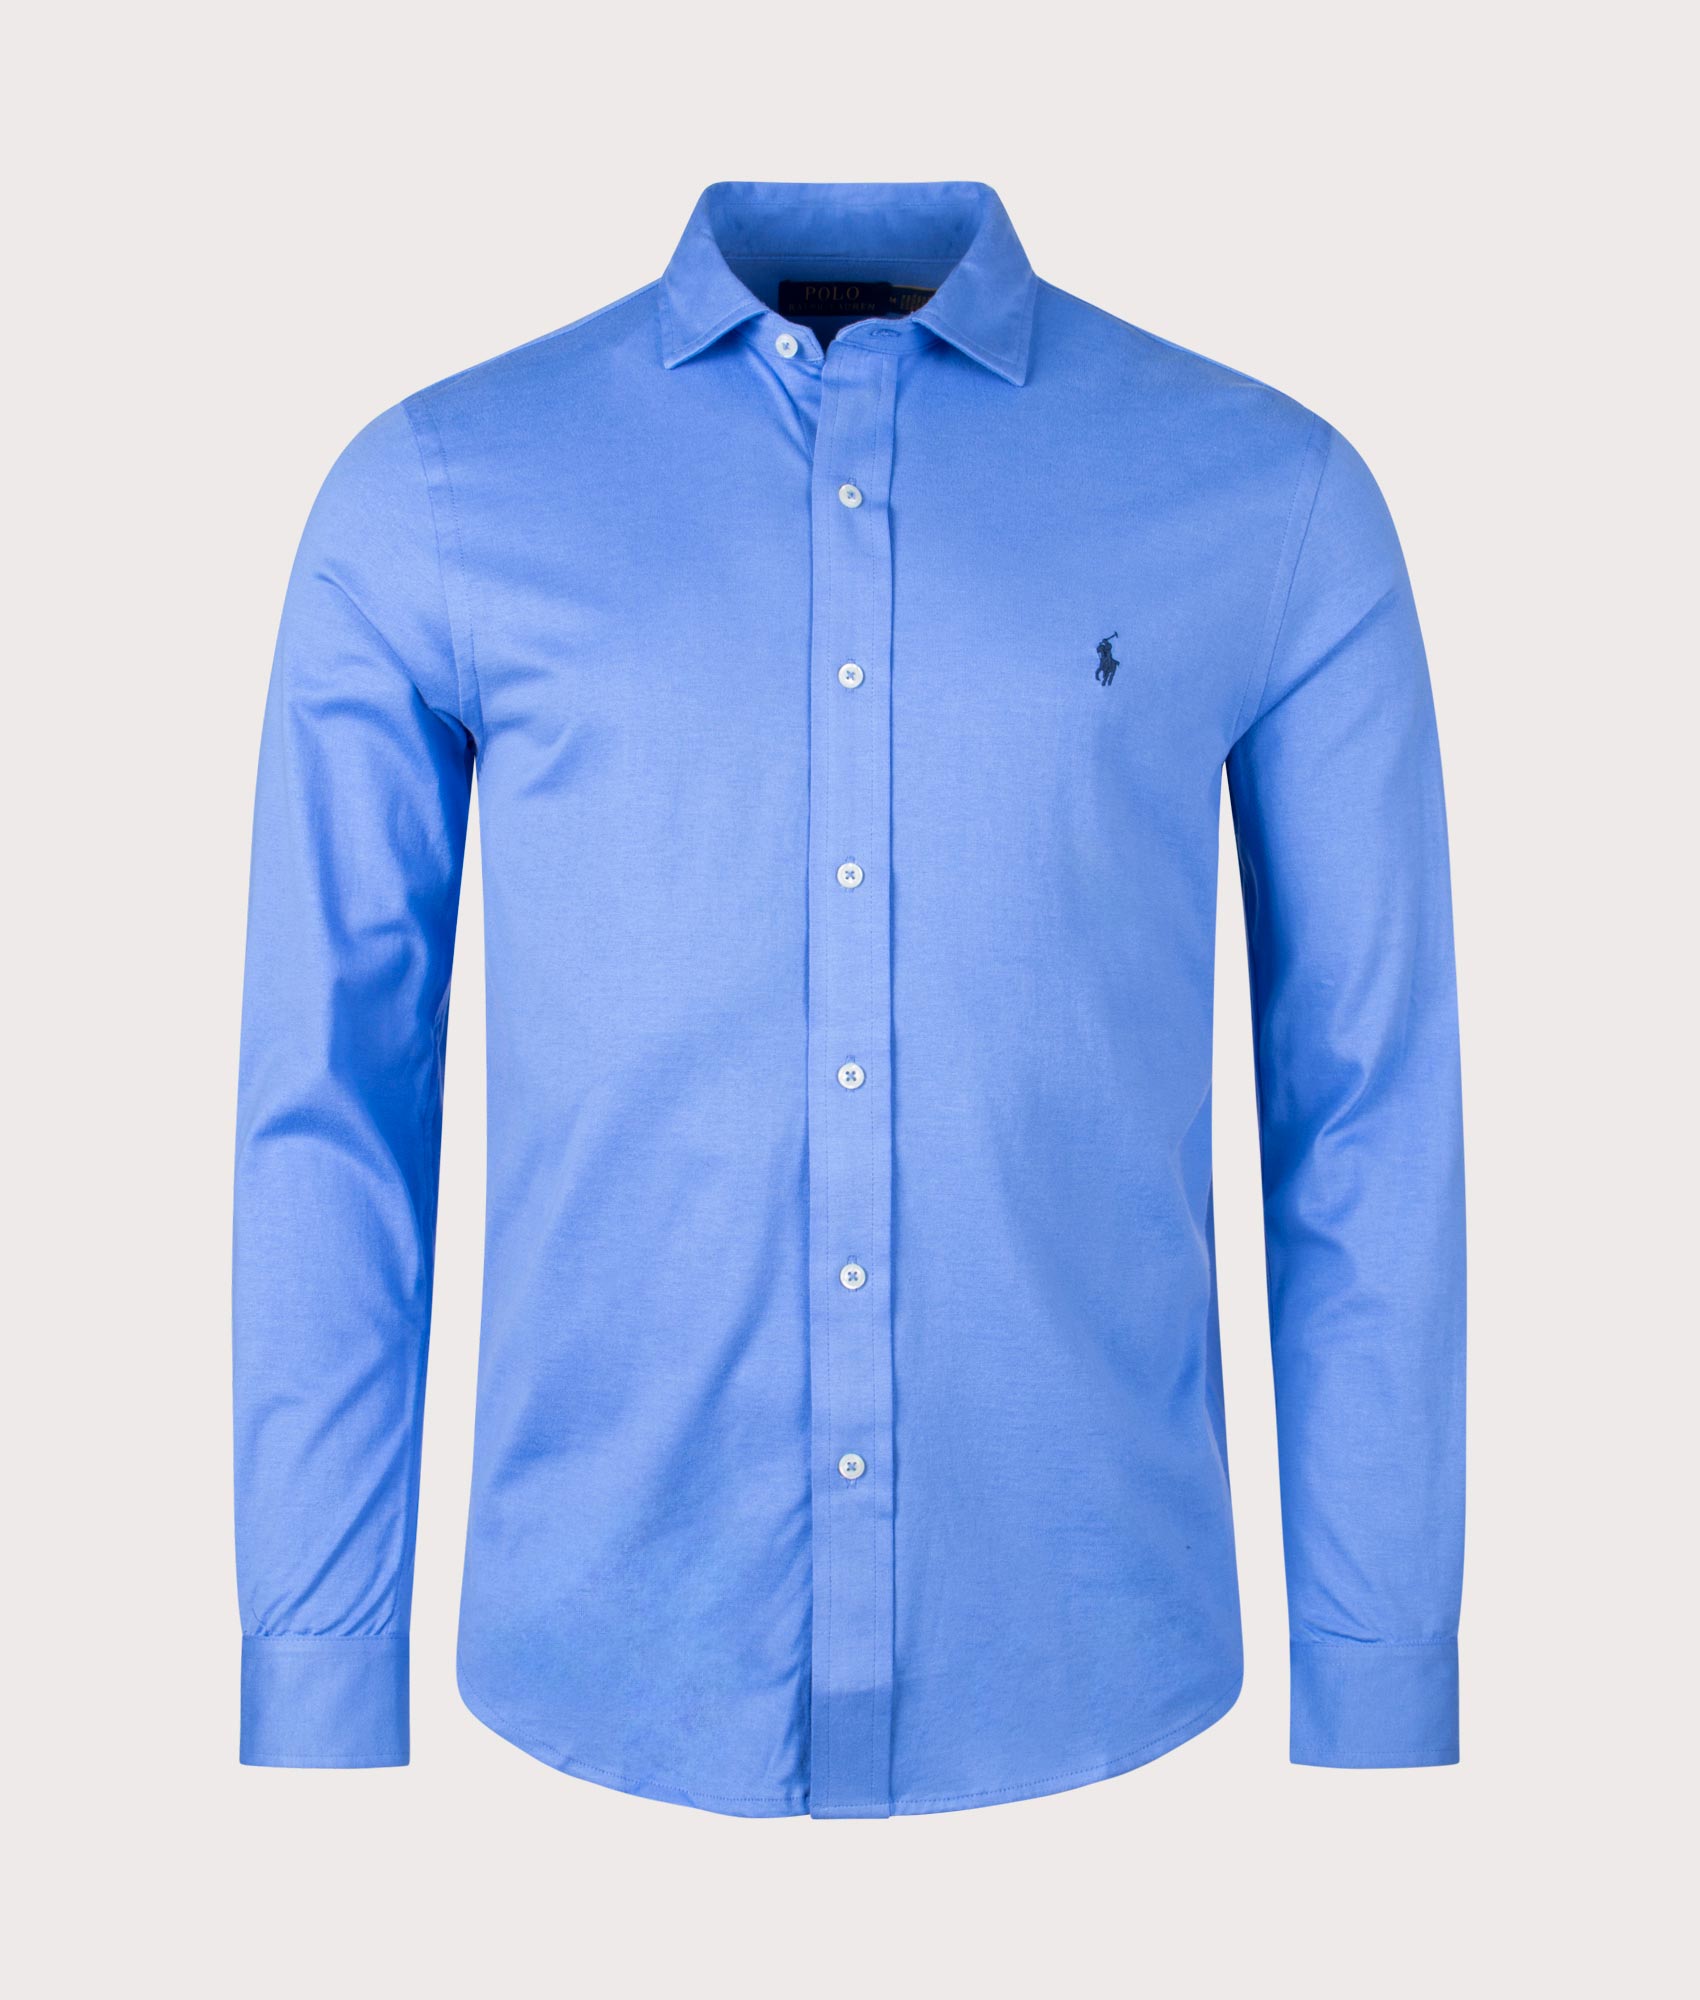 Jersey Shirt in Habor Island Blue | Harbor Island Blue | EQVVS